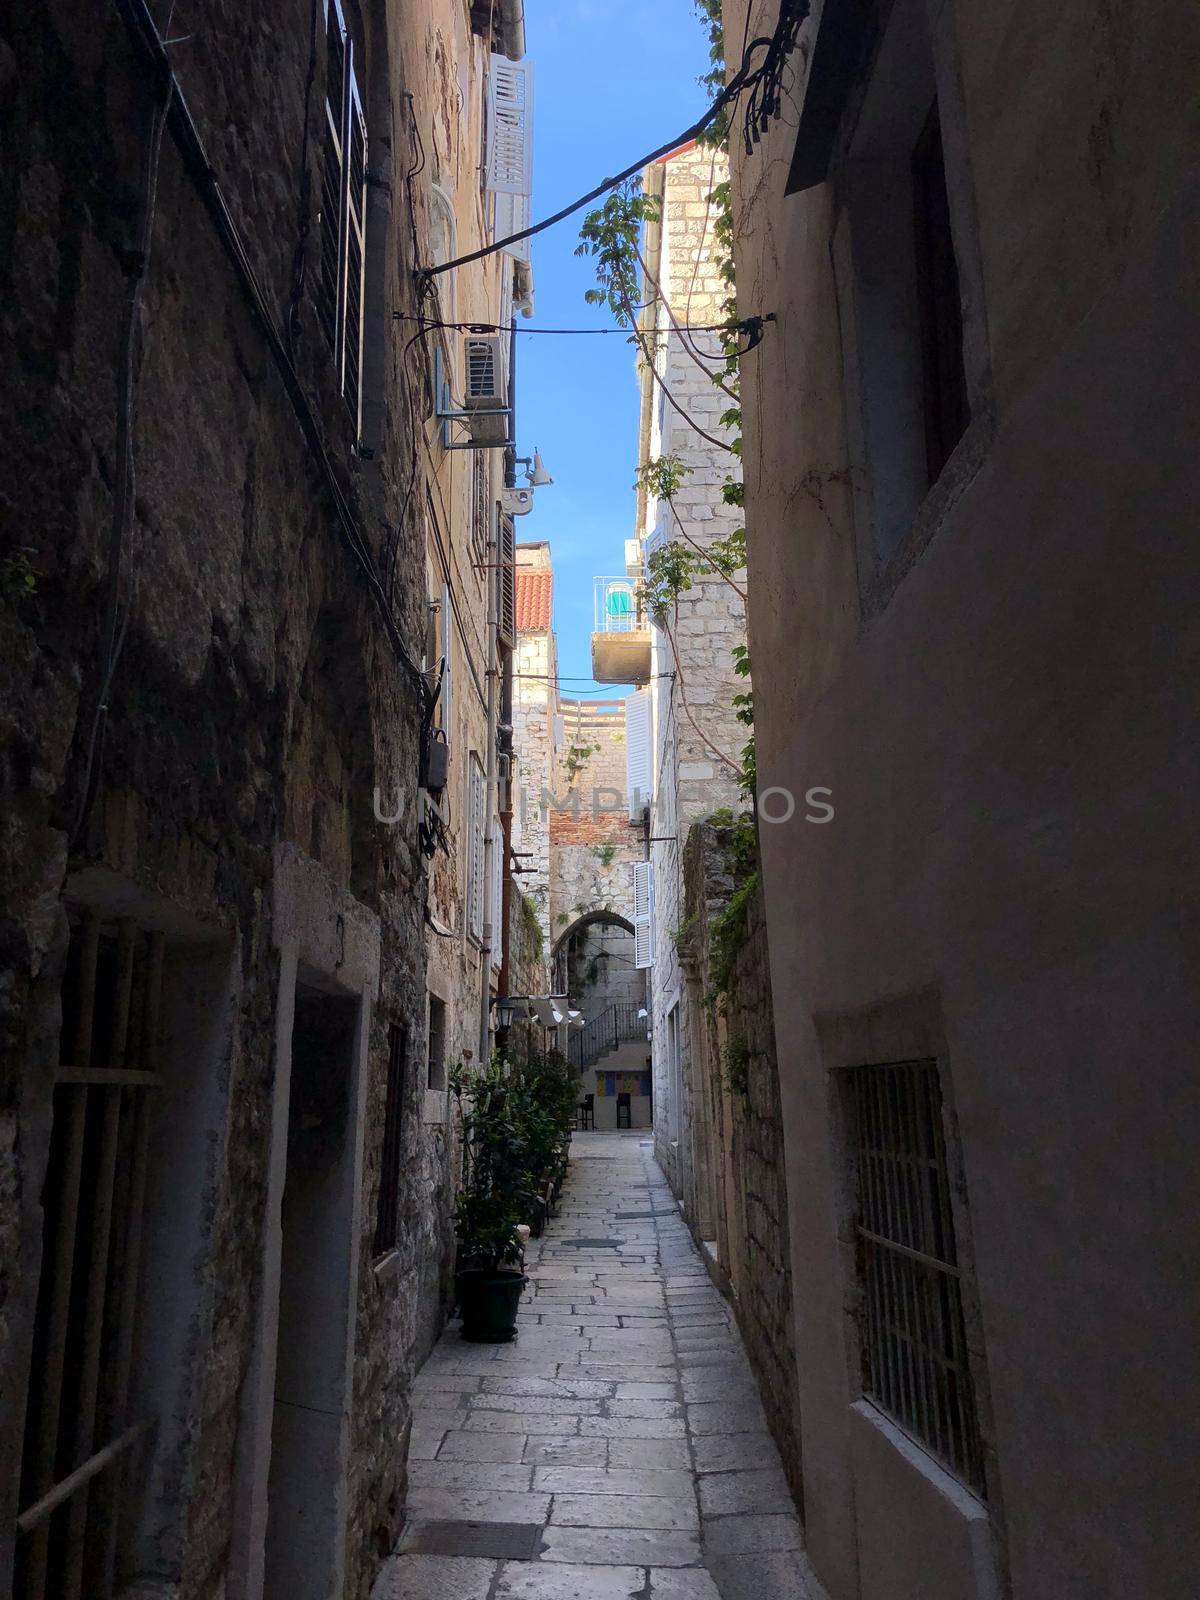 Walking through the old town of Split Croatia